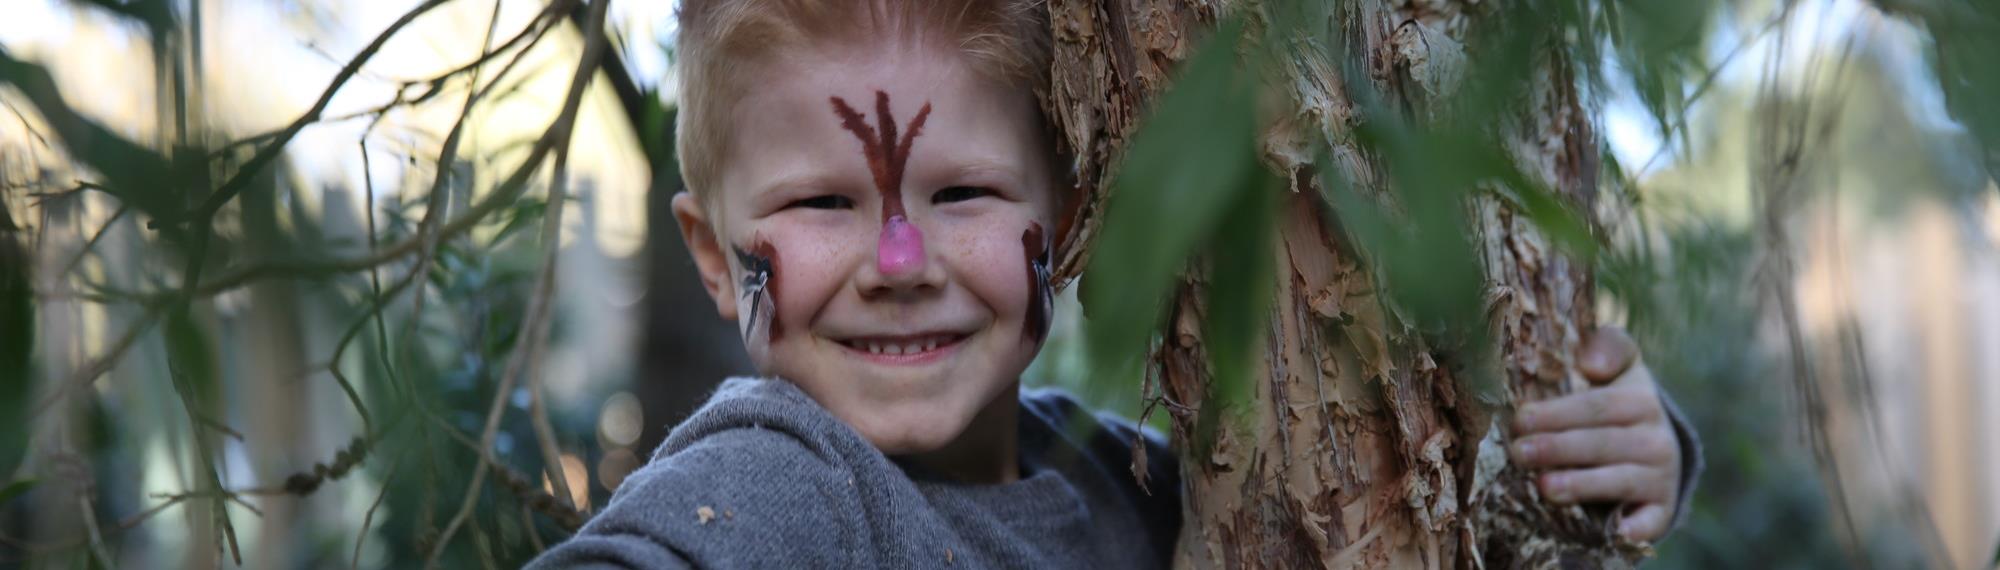 Smiling boy pretending to be a possum climbing a tree with possum face paint.